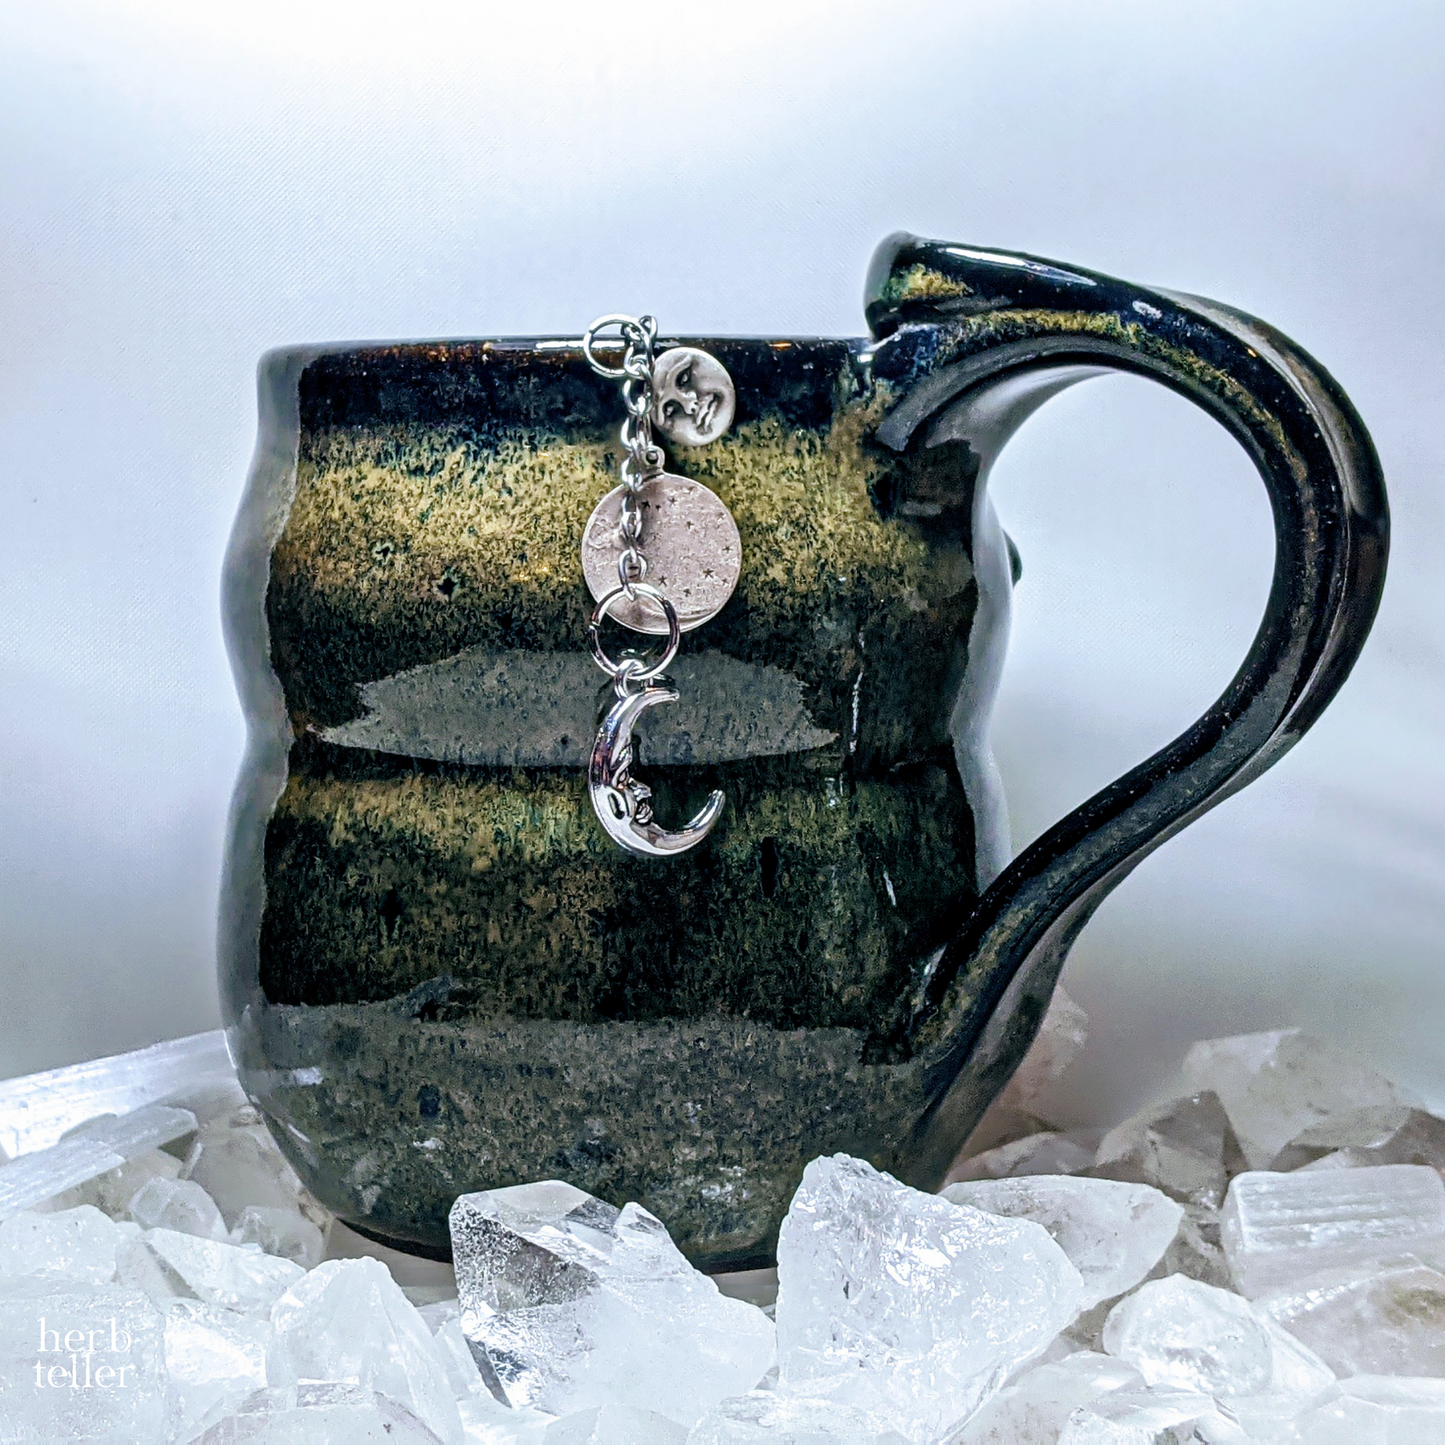 Dress Your Tea Teabling (Oh Luna tea infusion charm)